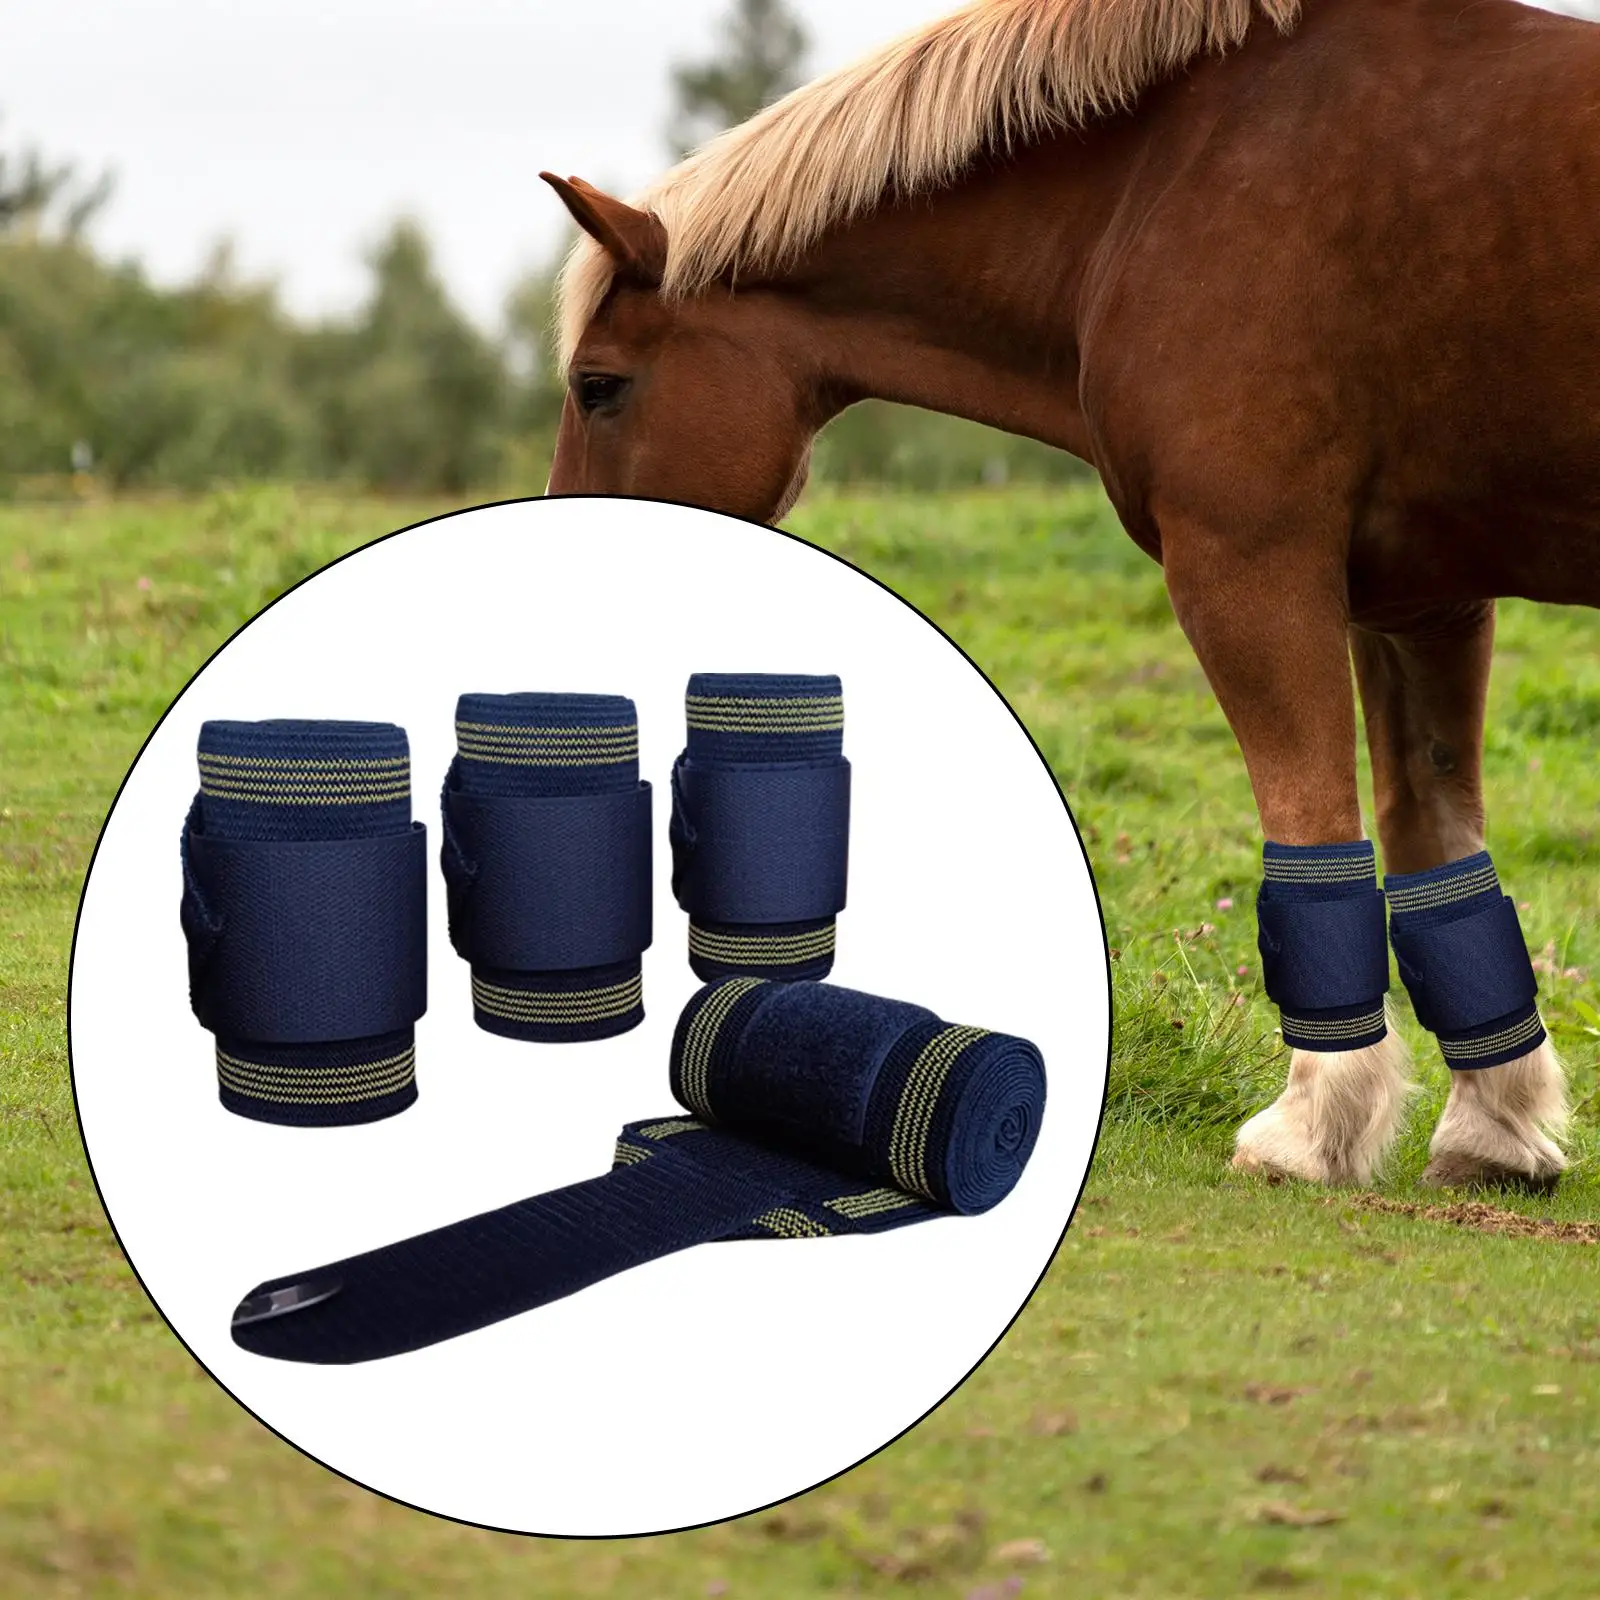 4 Pieces Horse Leg Wraps Riding Race Horse Boot Wrap Equestrian Accessories Elastic Leg Guards for Livestock Training Exercising